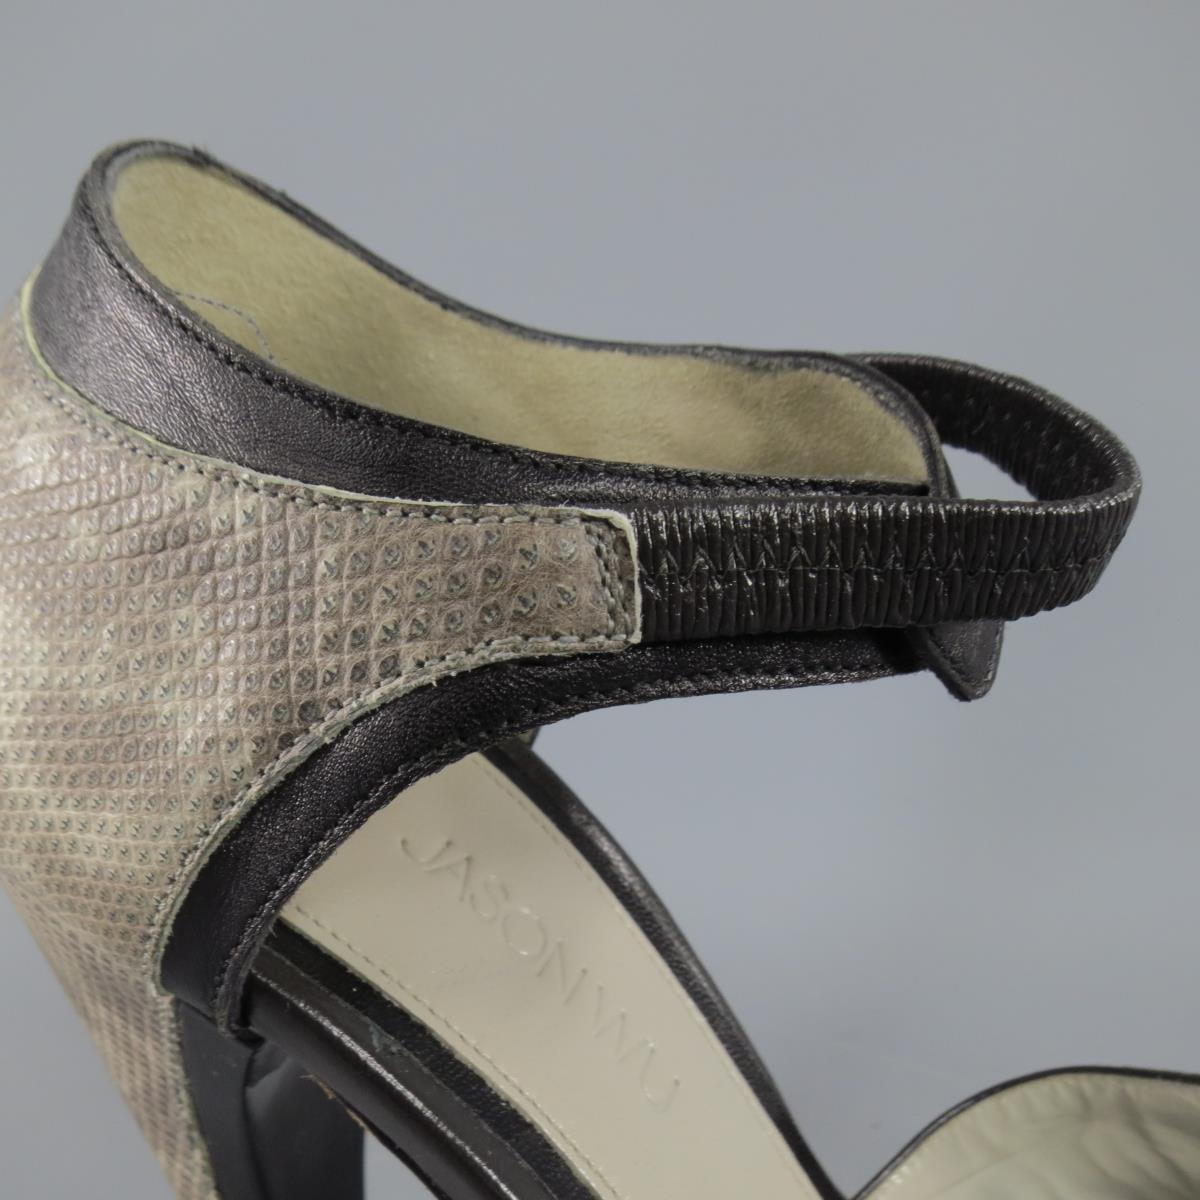 JASON WU Size 8 Black & Gray Leather Platform Snake Skin Platform Heels